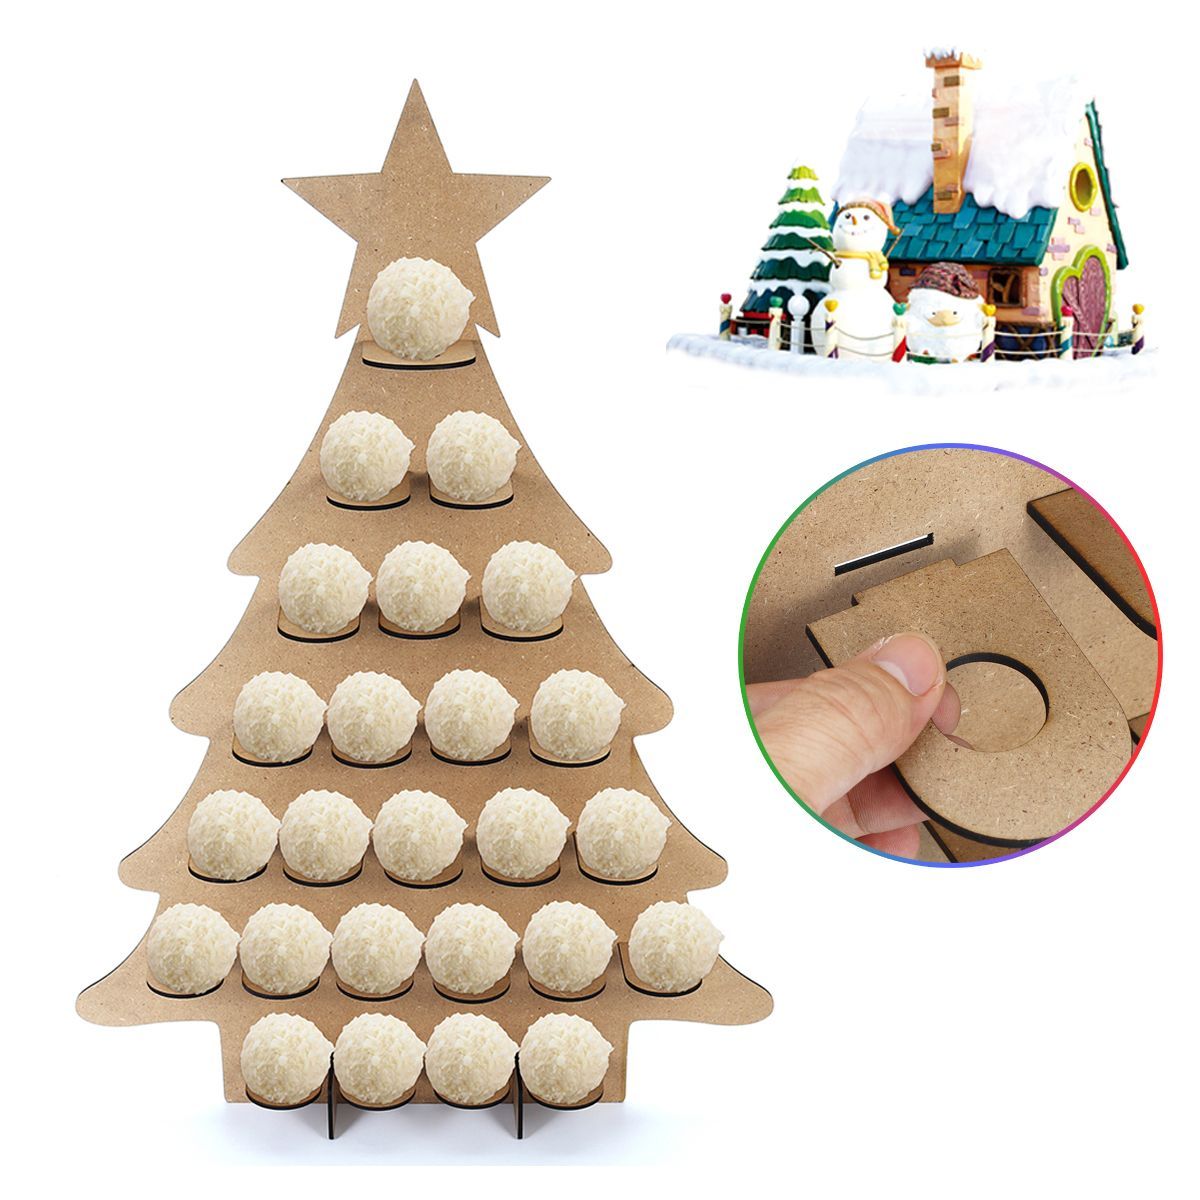 Wooden-Family-Advent-Calendar-Christmas-Tree-25-Chocolates-Stand-Rack-DIY-Decorations-1458960